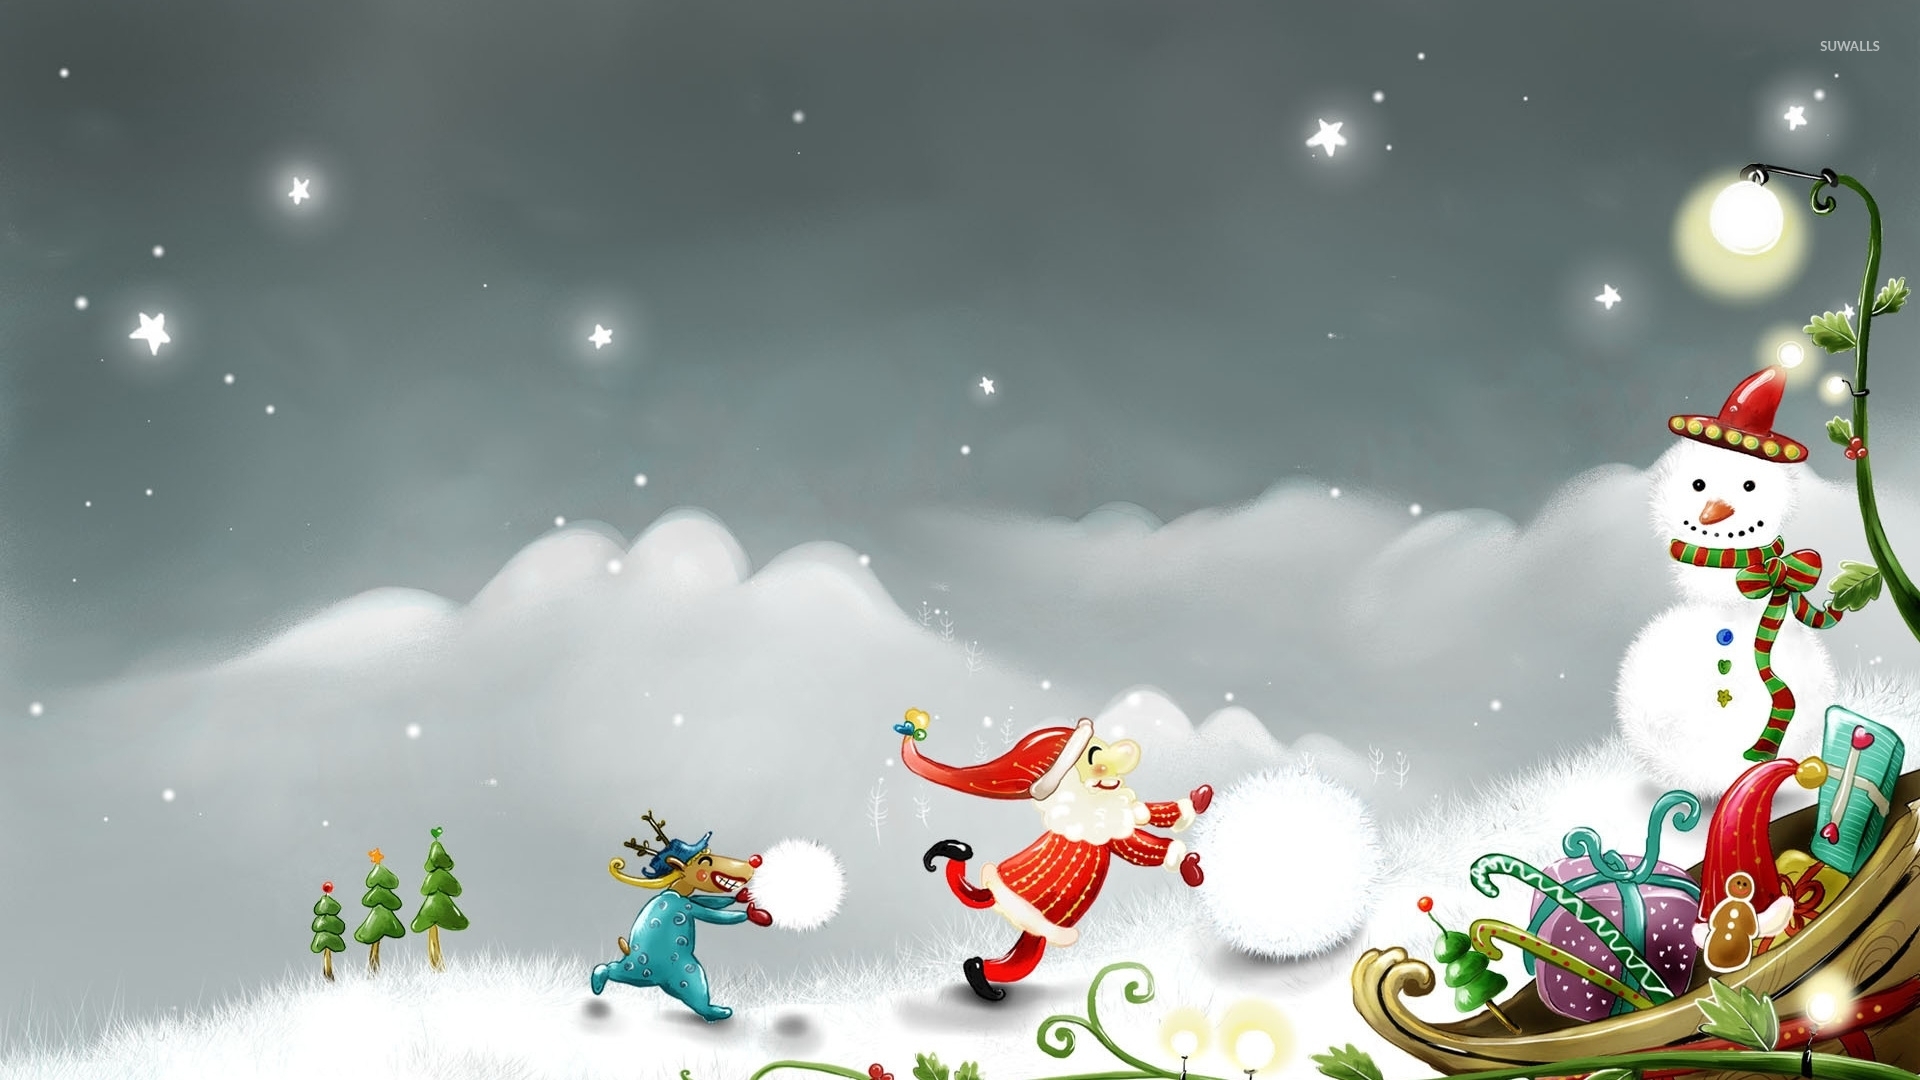 Cute Merry Christmas Cover Photo Facebook - 1920x1080 Wallpaper 